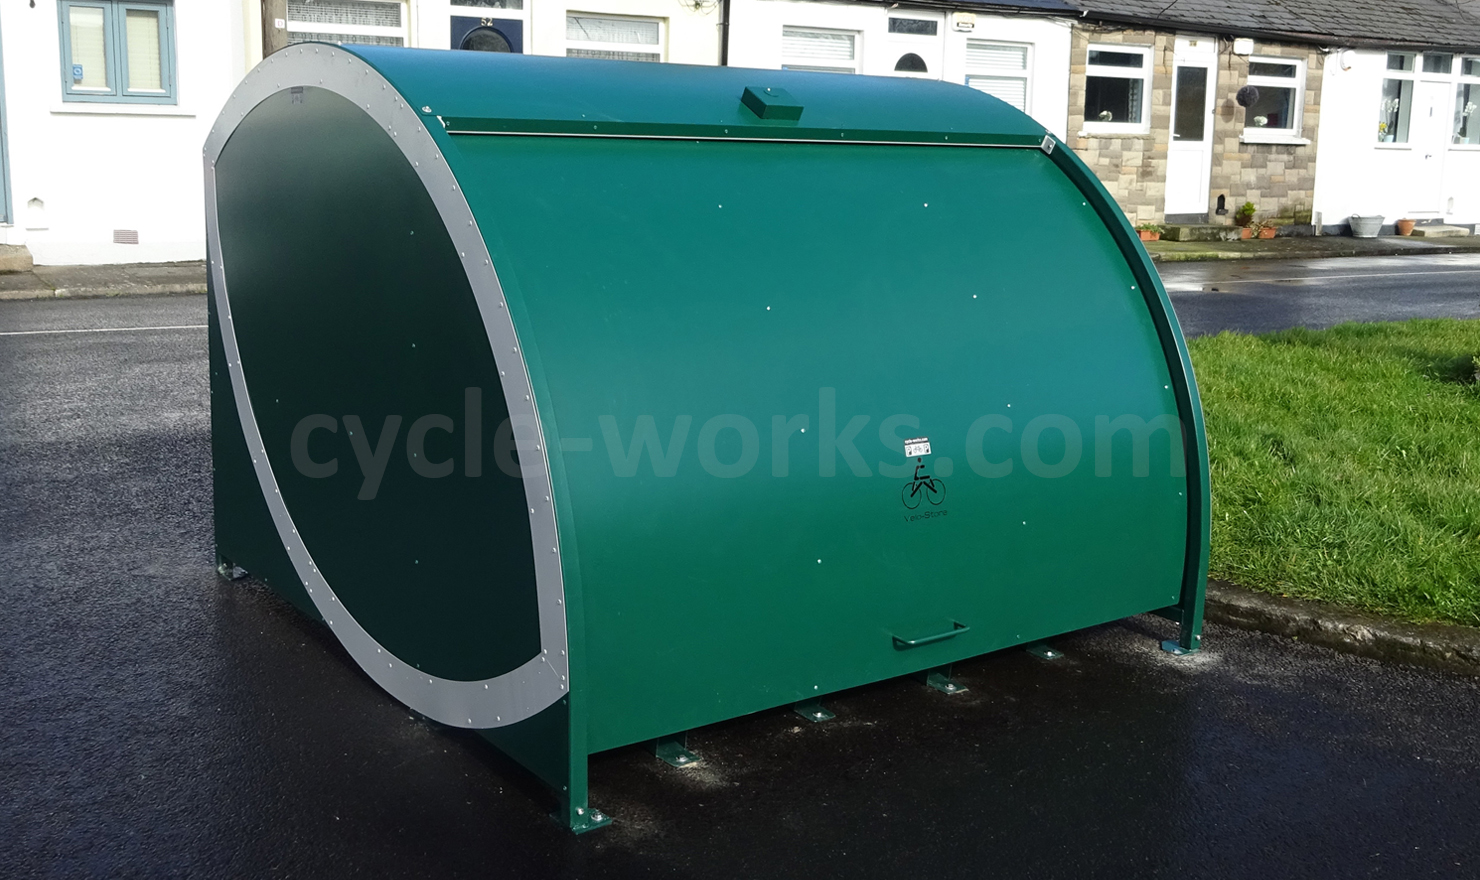 Cycle-Works Velo-Store Bike Storage by Kirwan Cottages Dublin